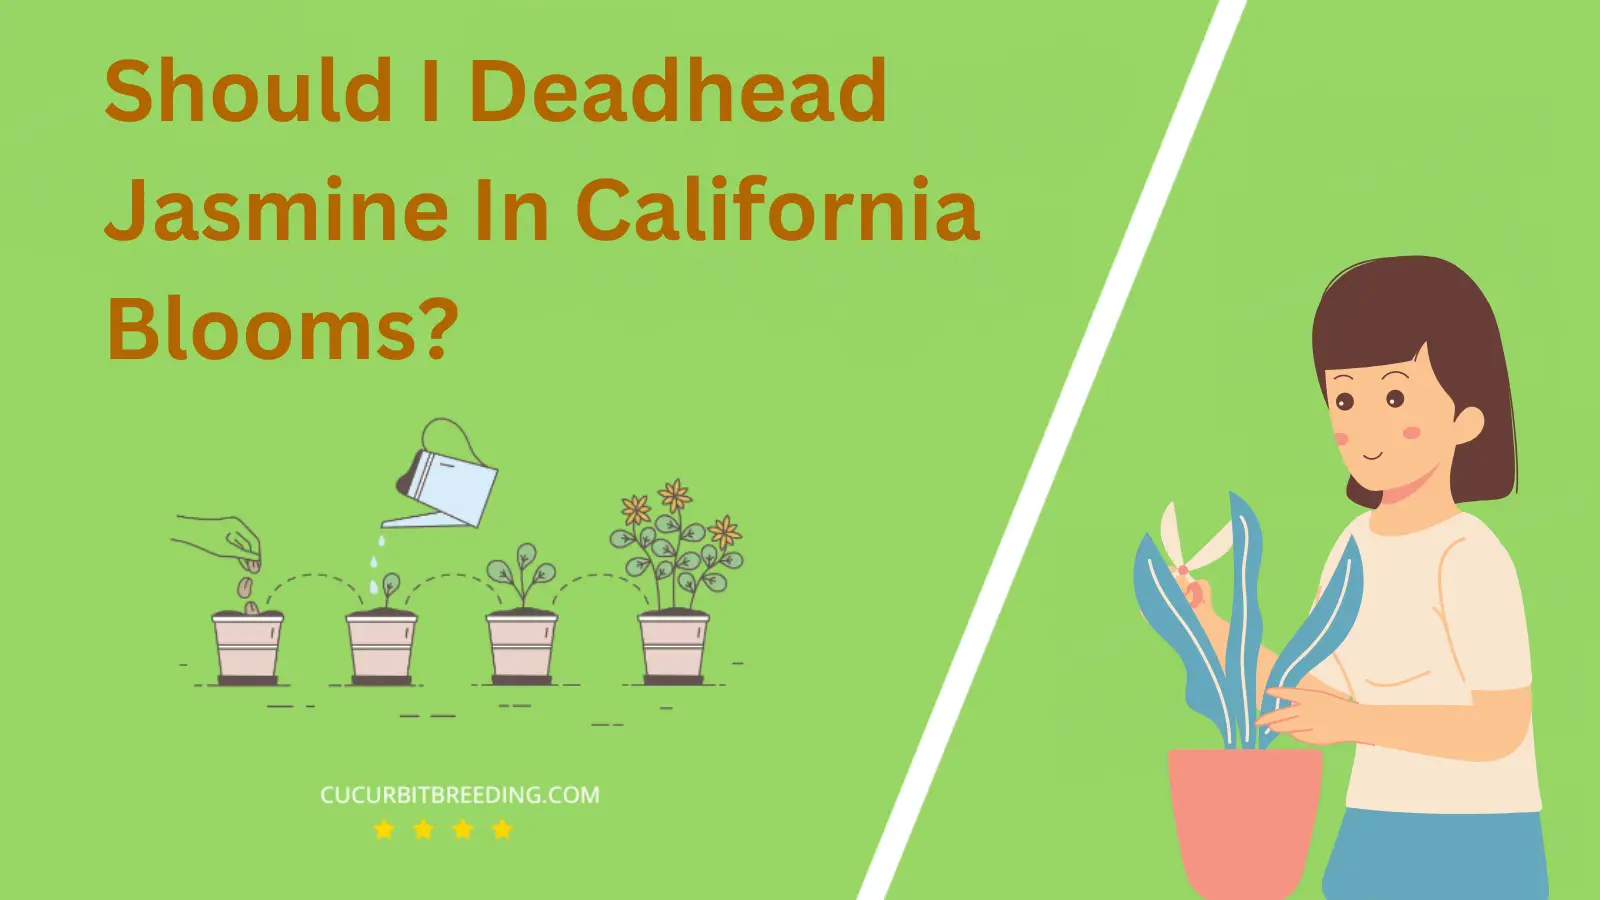 Should I Deadhead Jasmine In California Blooms?